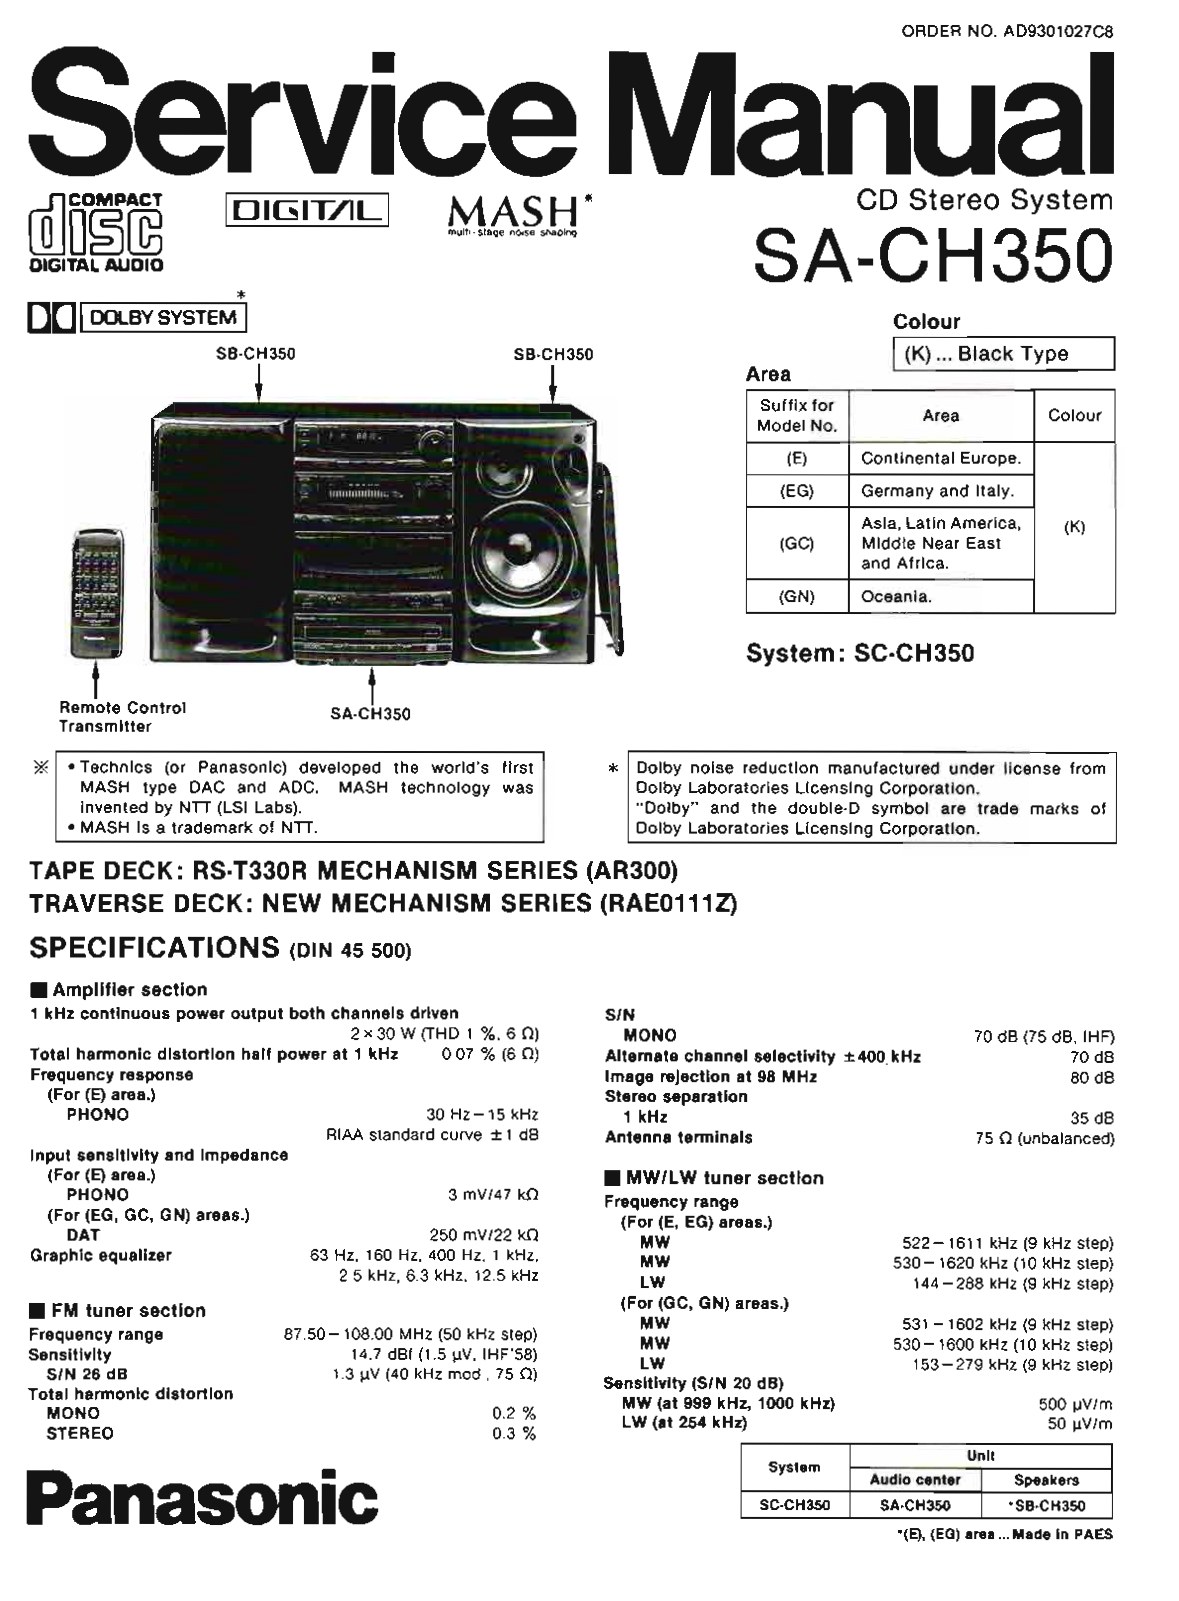 Technics SA-CH350 Service Manual